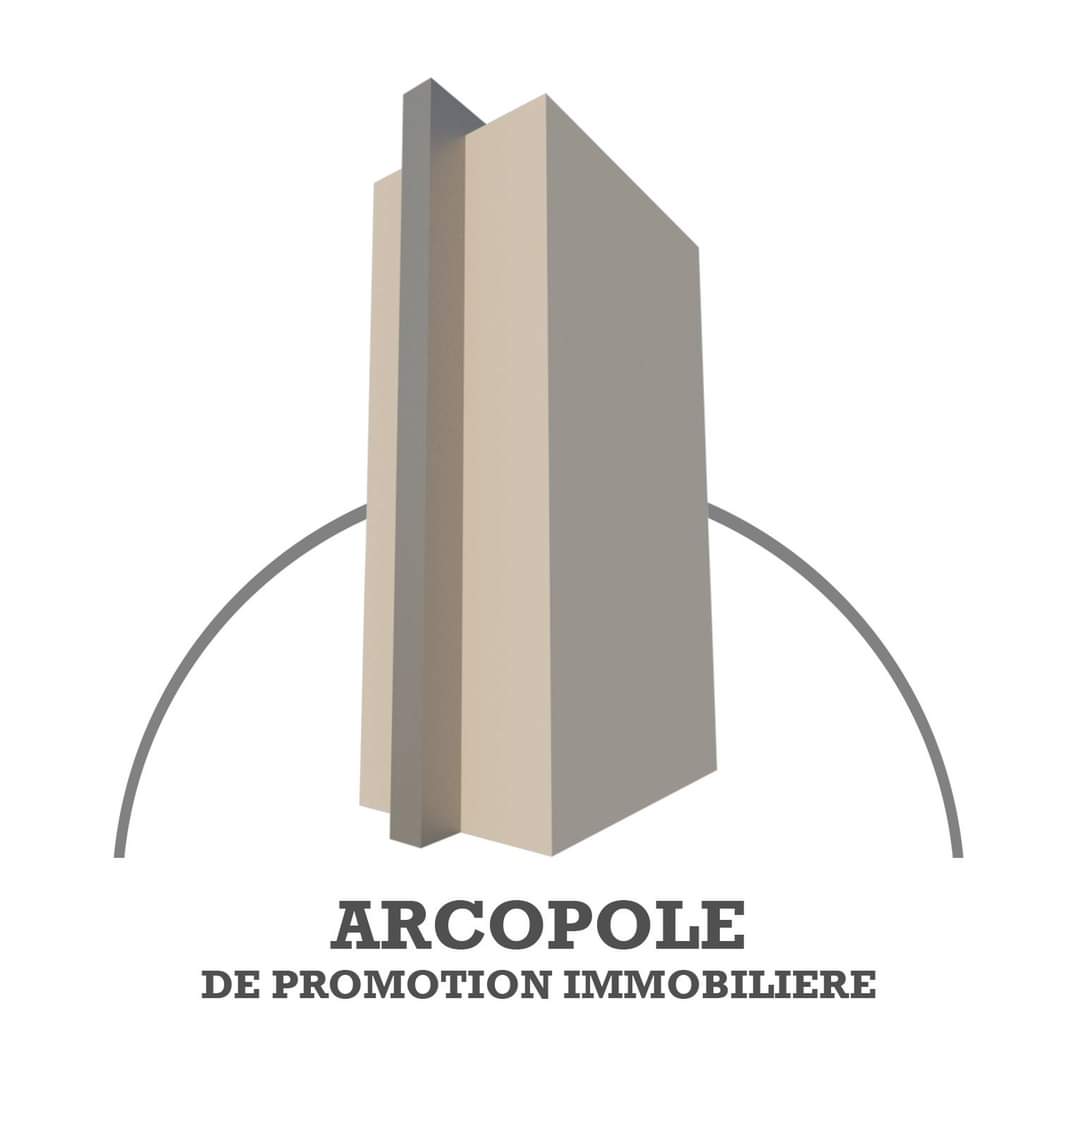 Arcopole